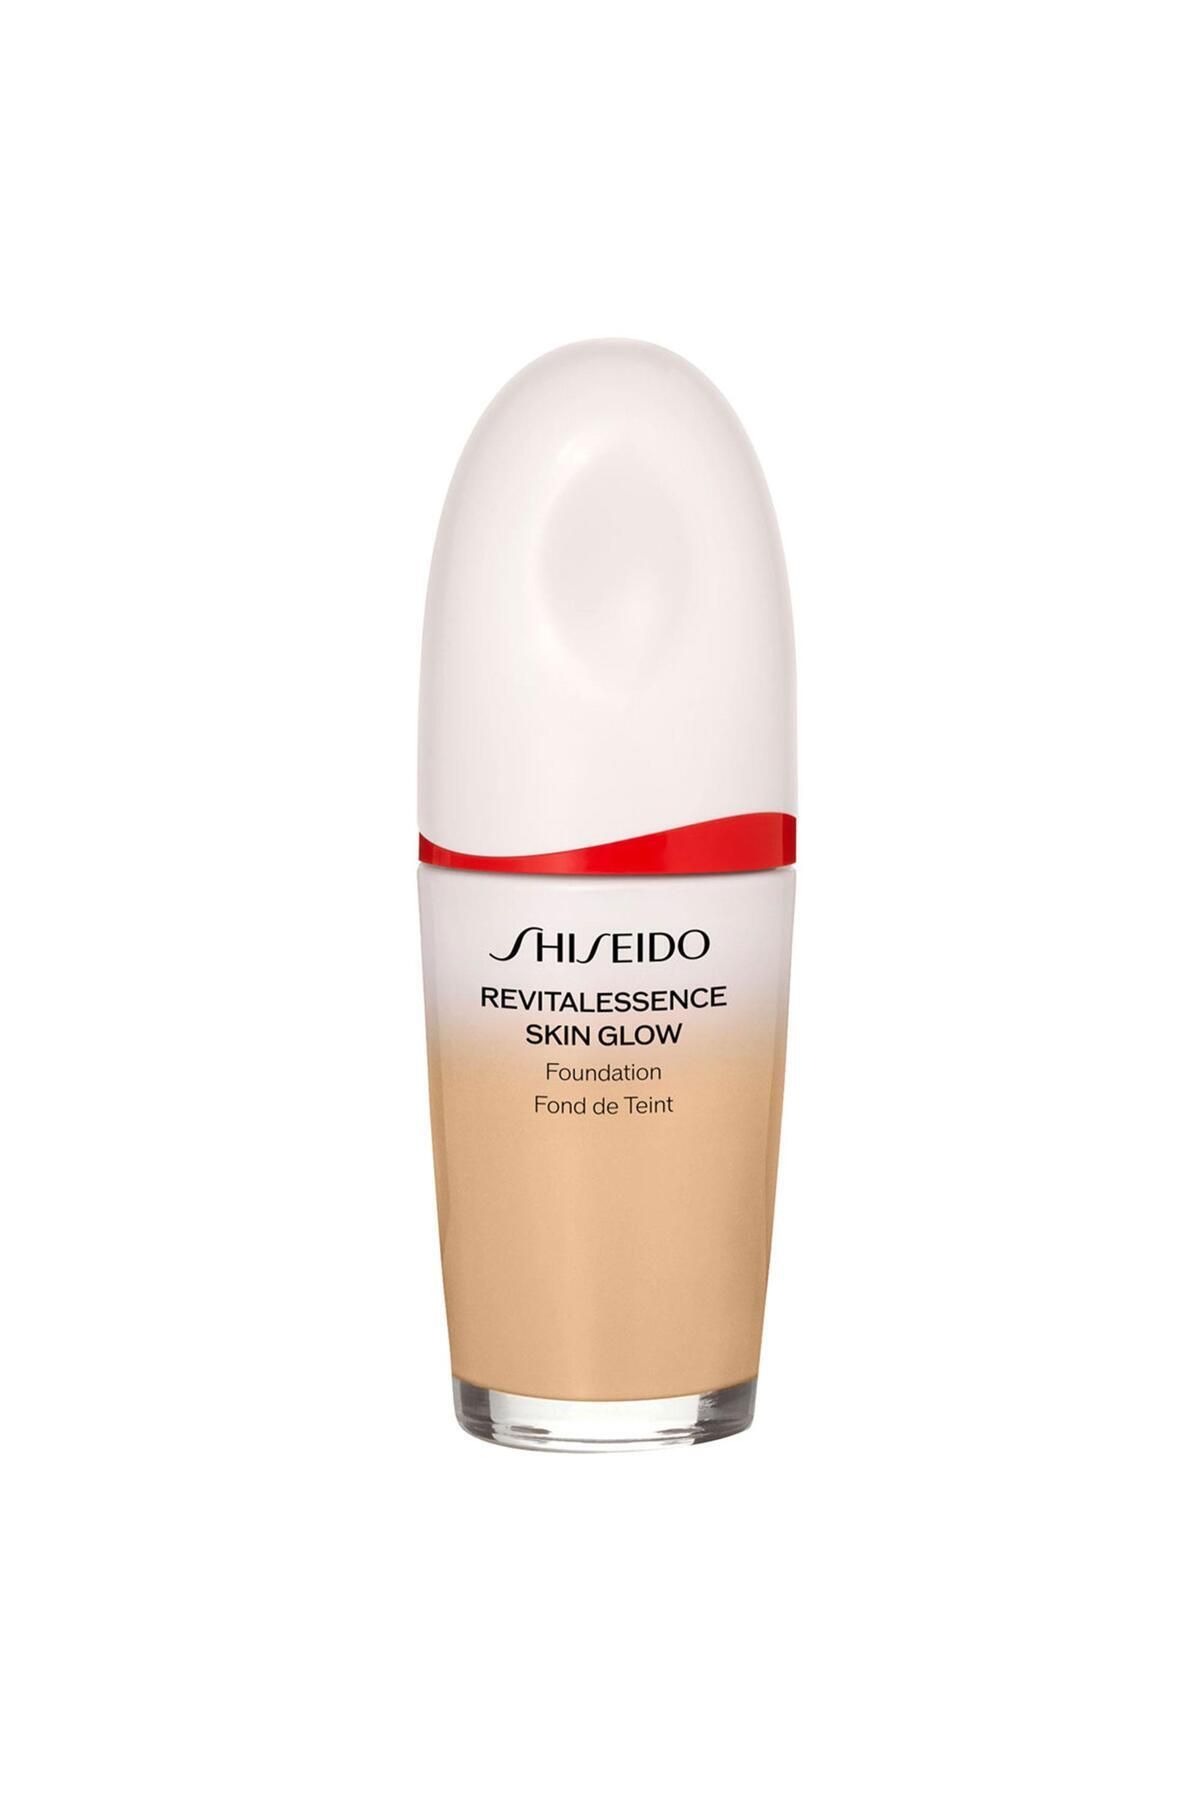 Shiseido Revıtalessence Skın Glow Foundatıon Spf 30 Pa 330